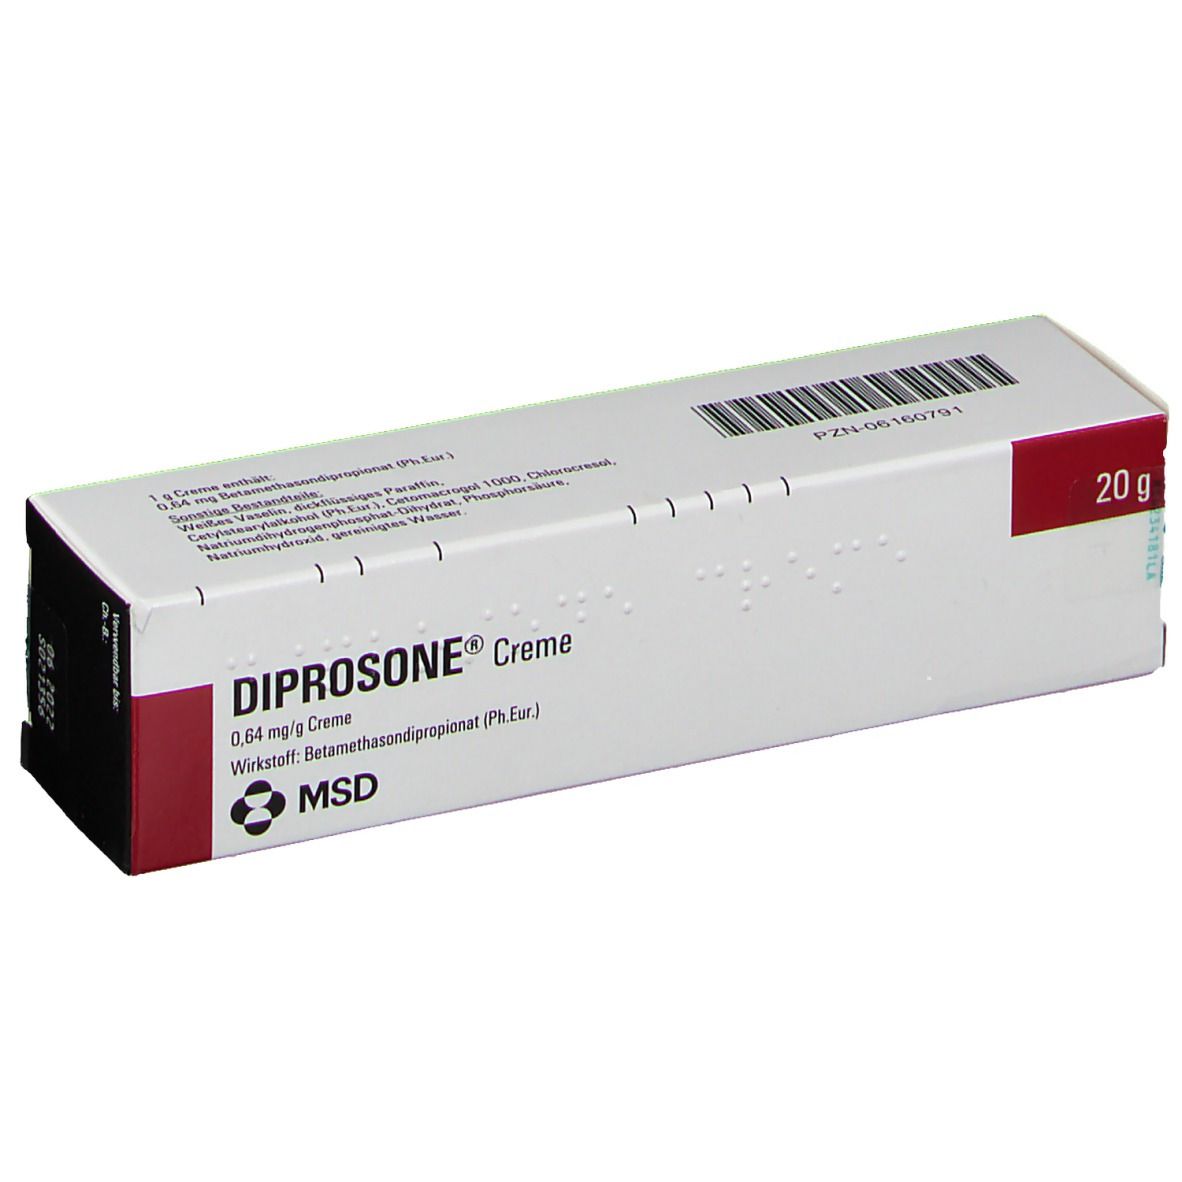 DIPROSONE® Creme 0,64 mg/g